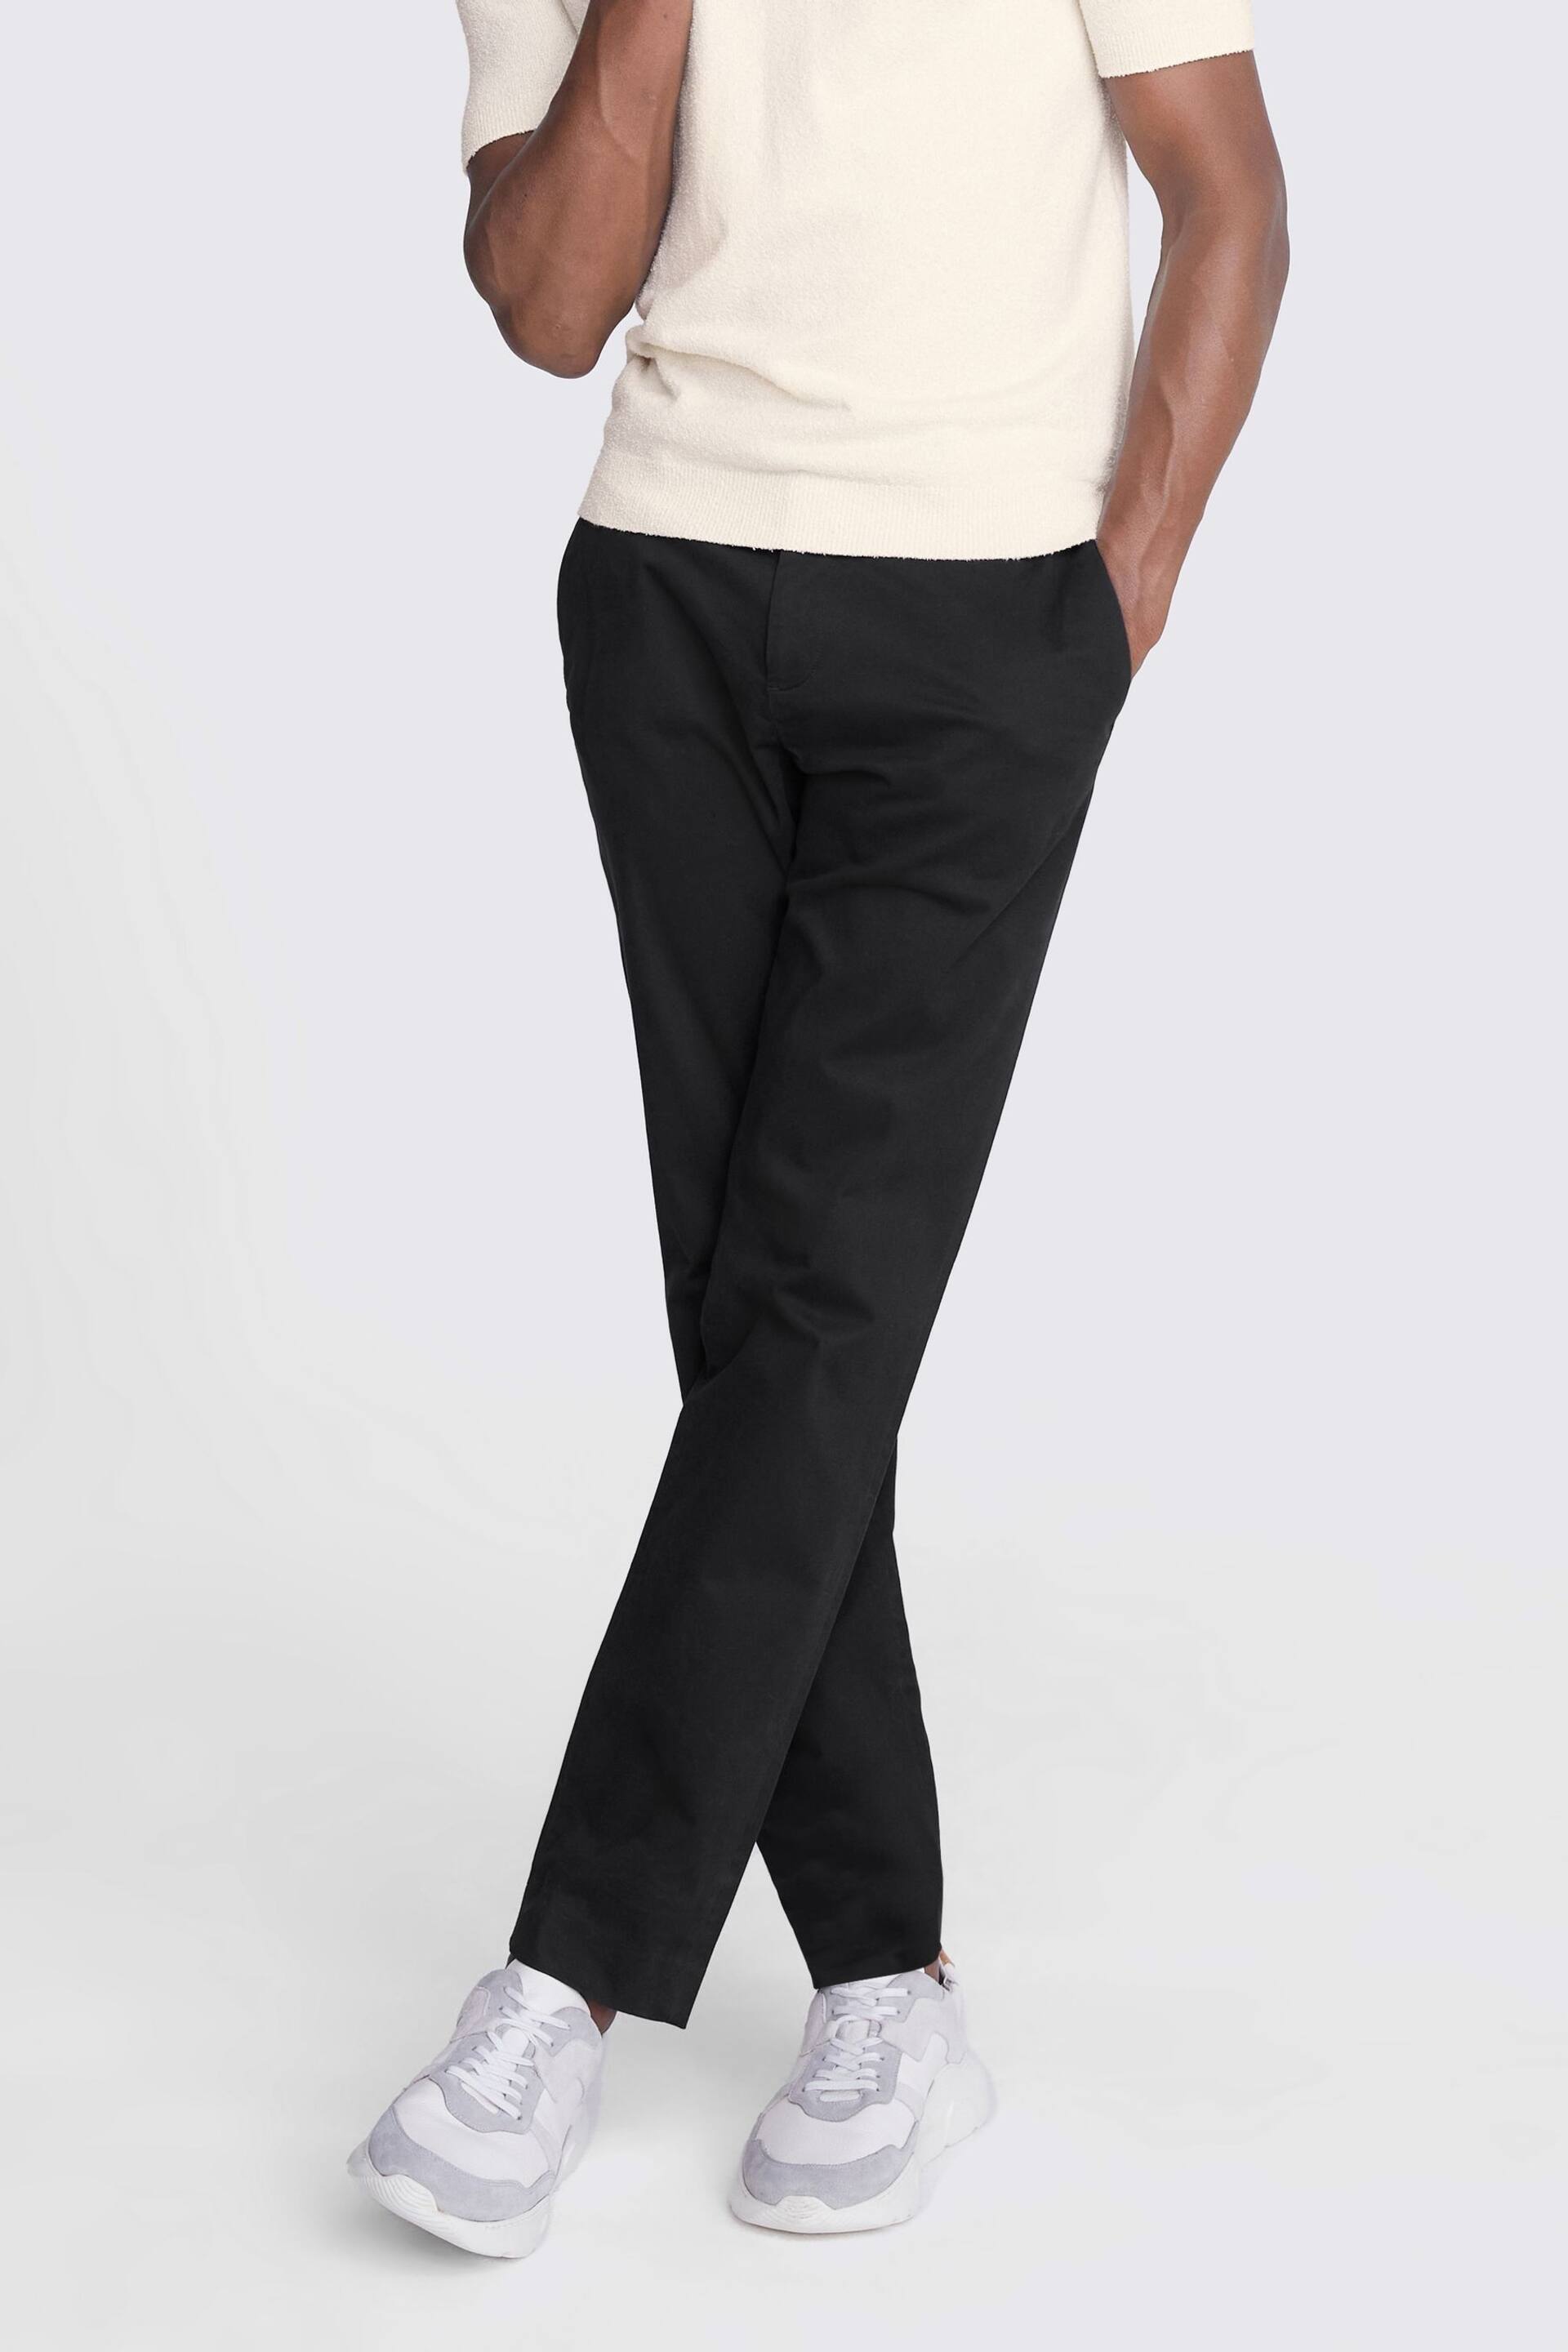 MOSS Black Slim Chino Trousers - Image 1 of 3